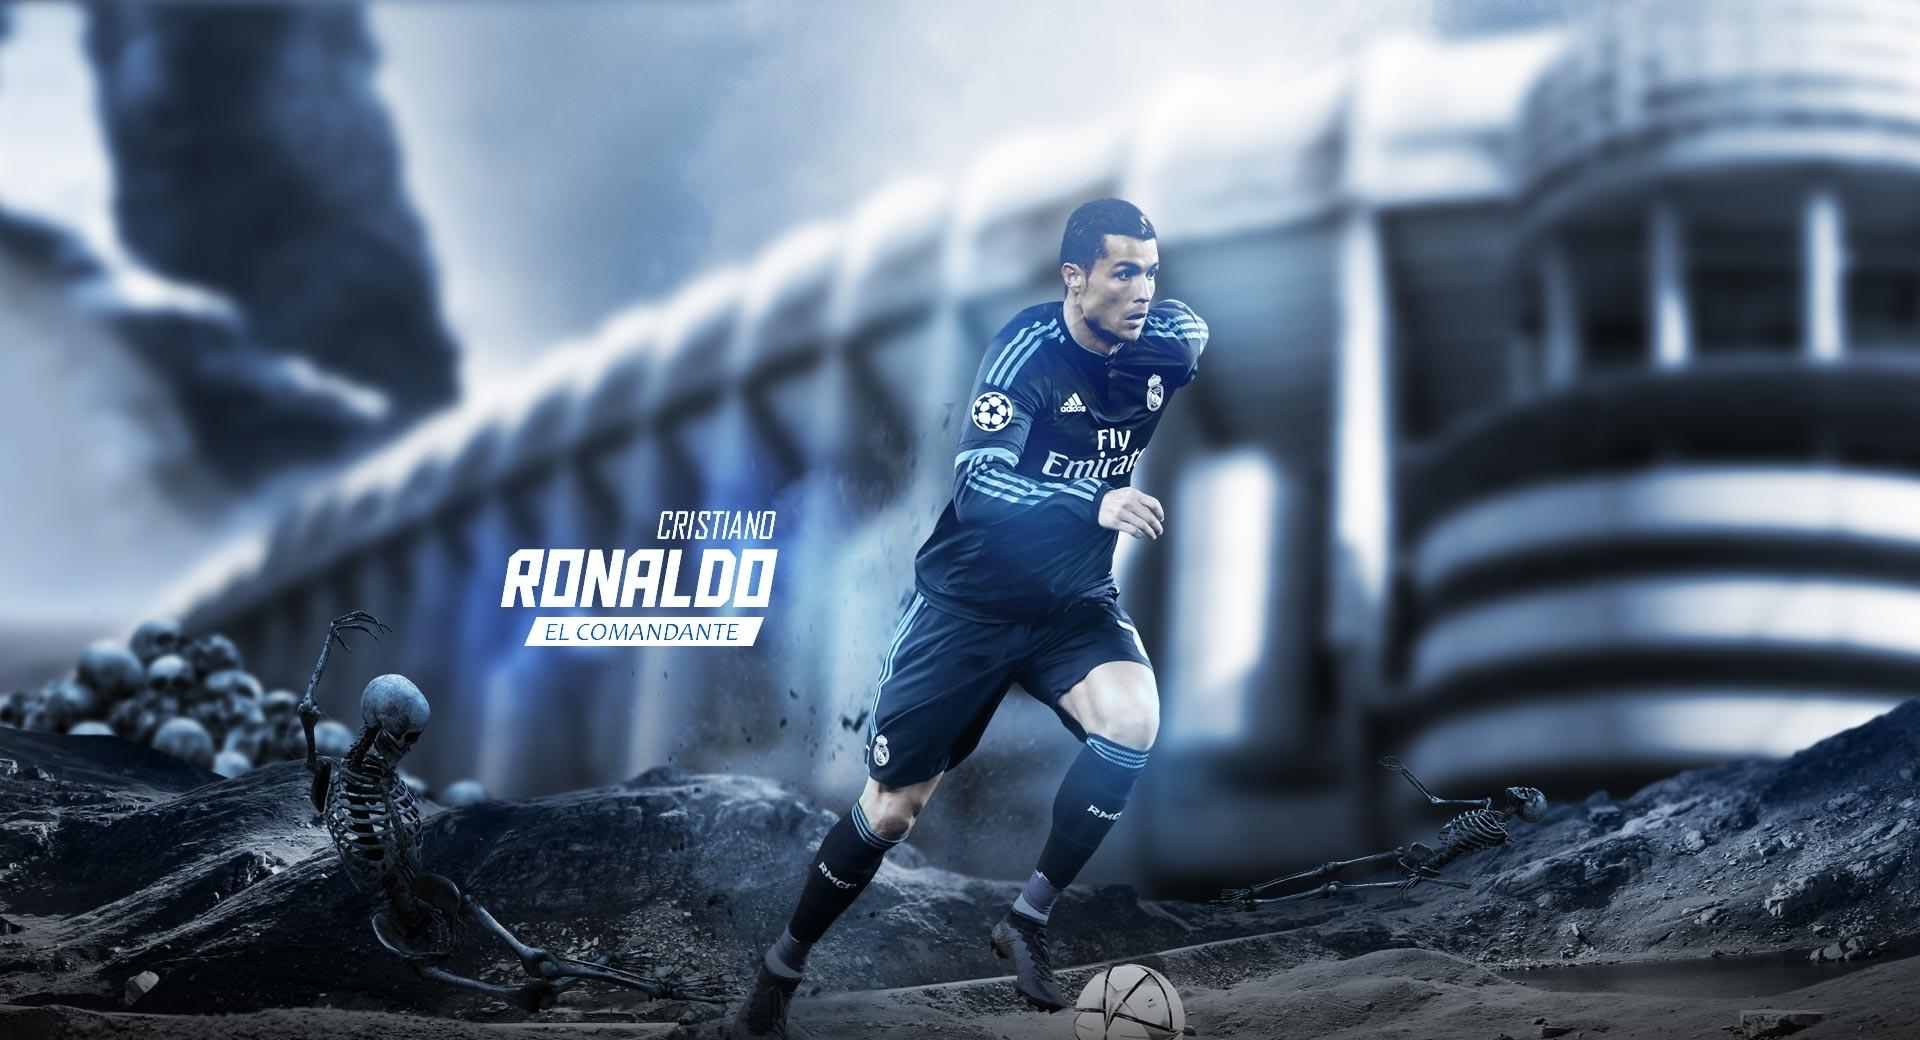 Cristiano Ronaldo - El Comandante at 1024 x 1024 iPad size wallpapers HD quality